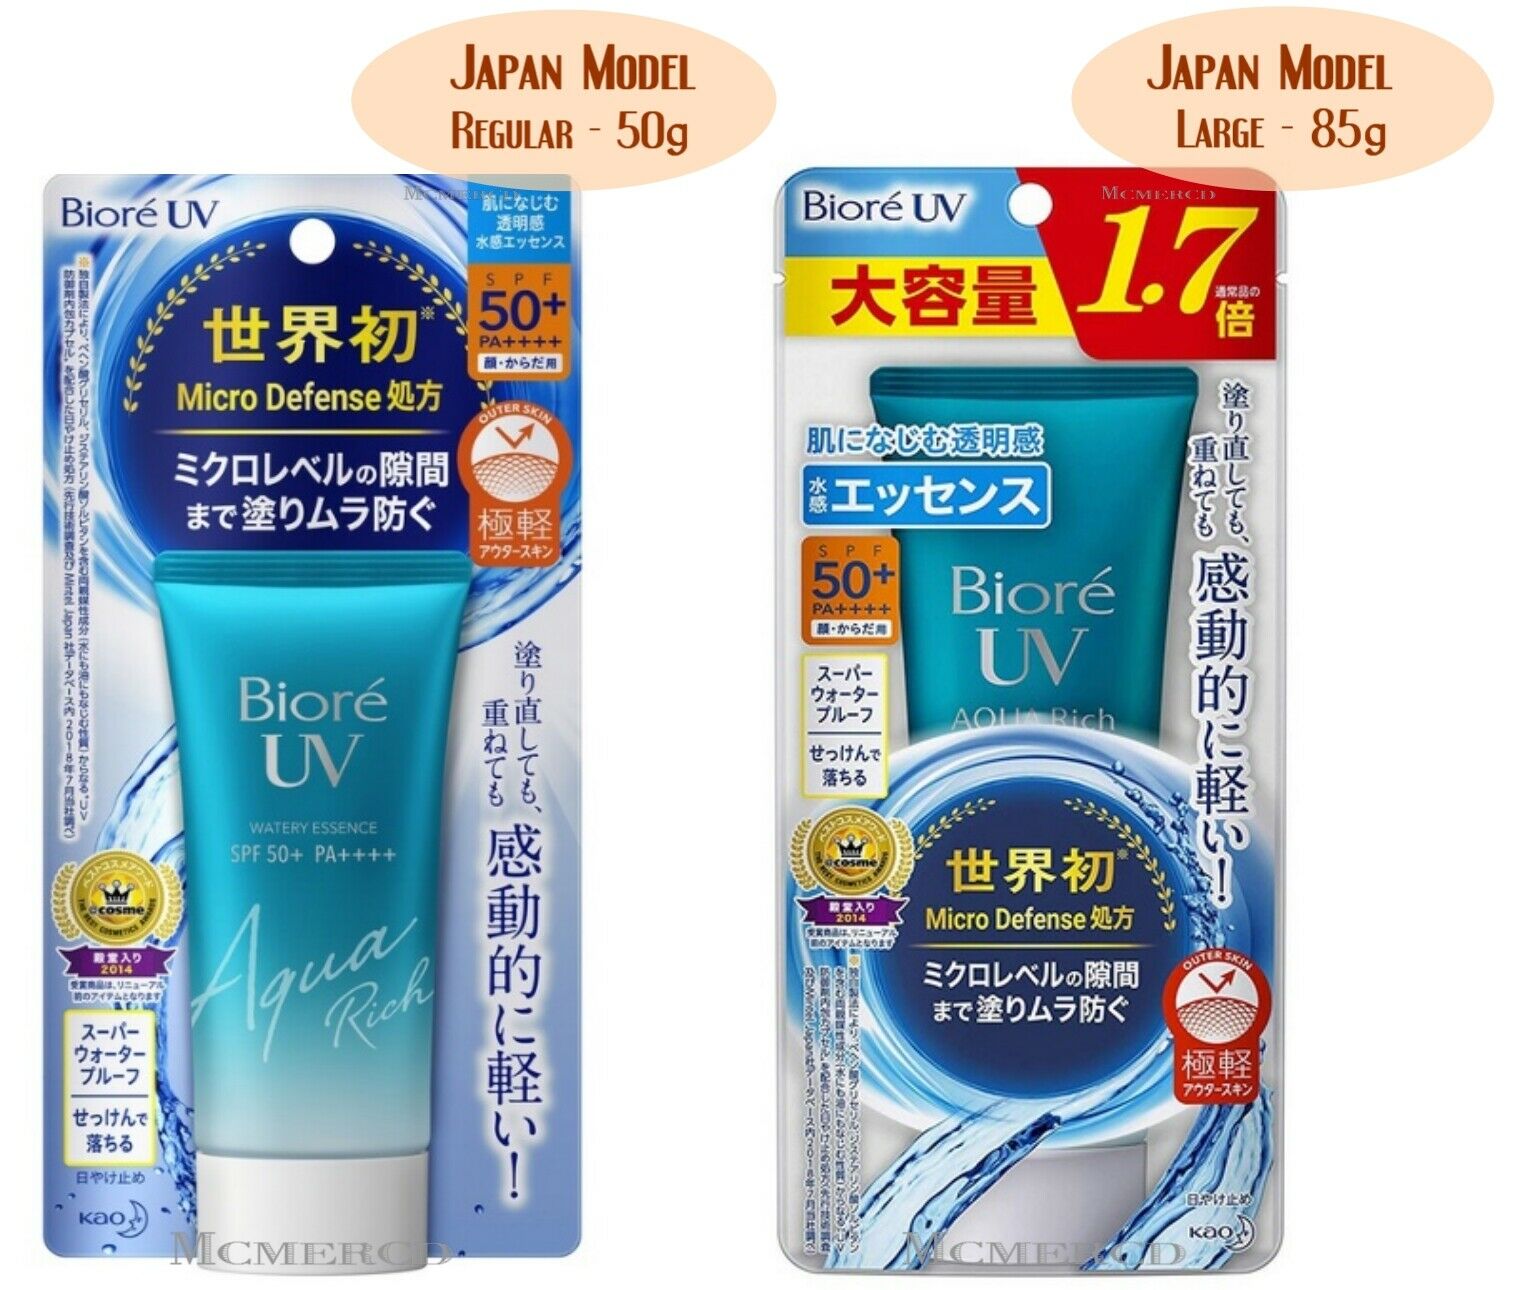 Biore Uv Aqua Rich Watery Essence Sunscreen Spf50+ Pa++++ - Us Seller